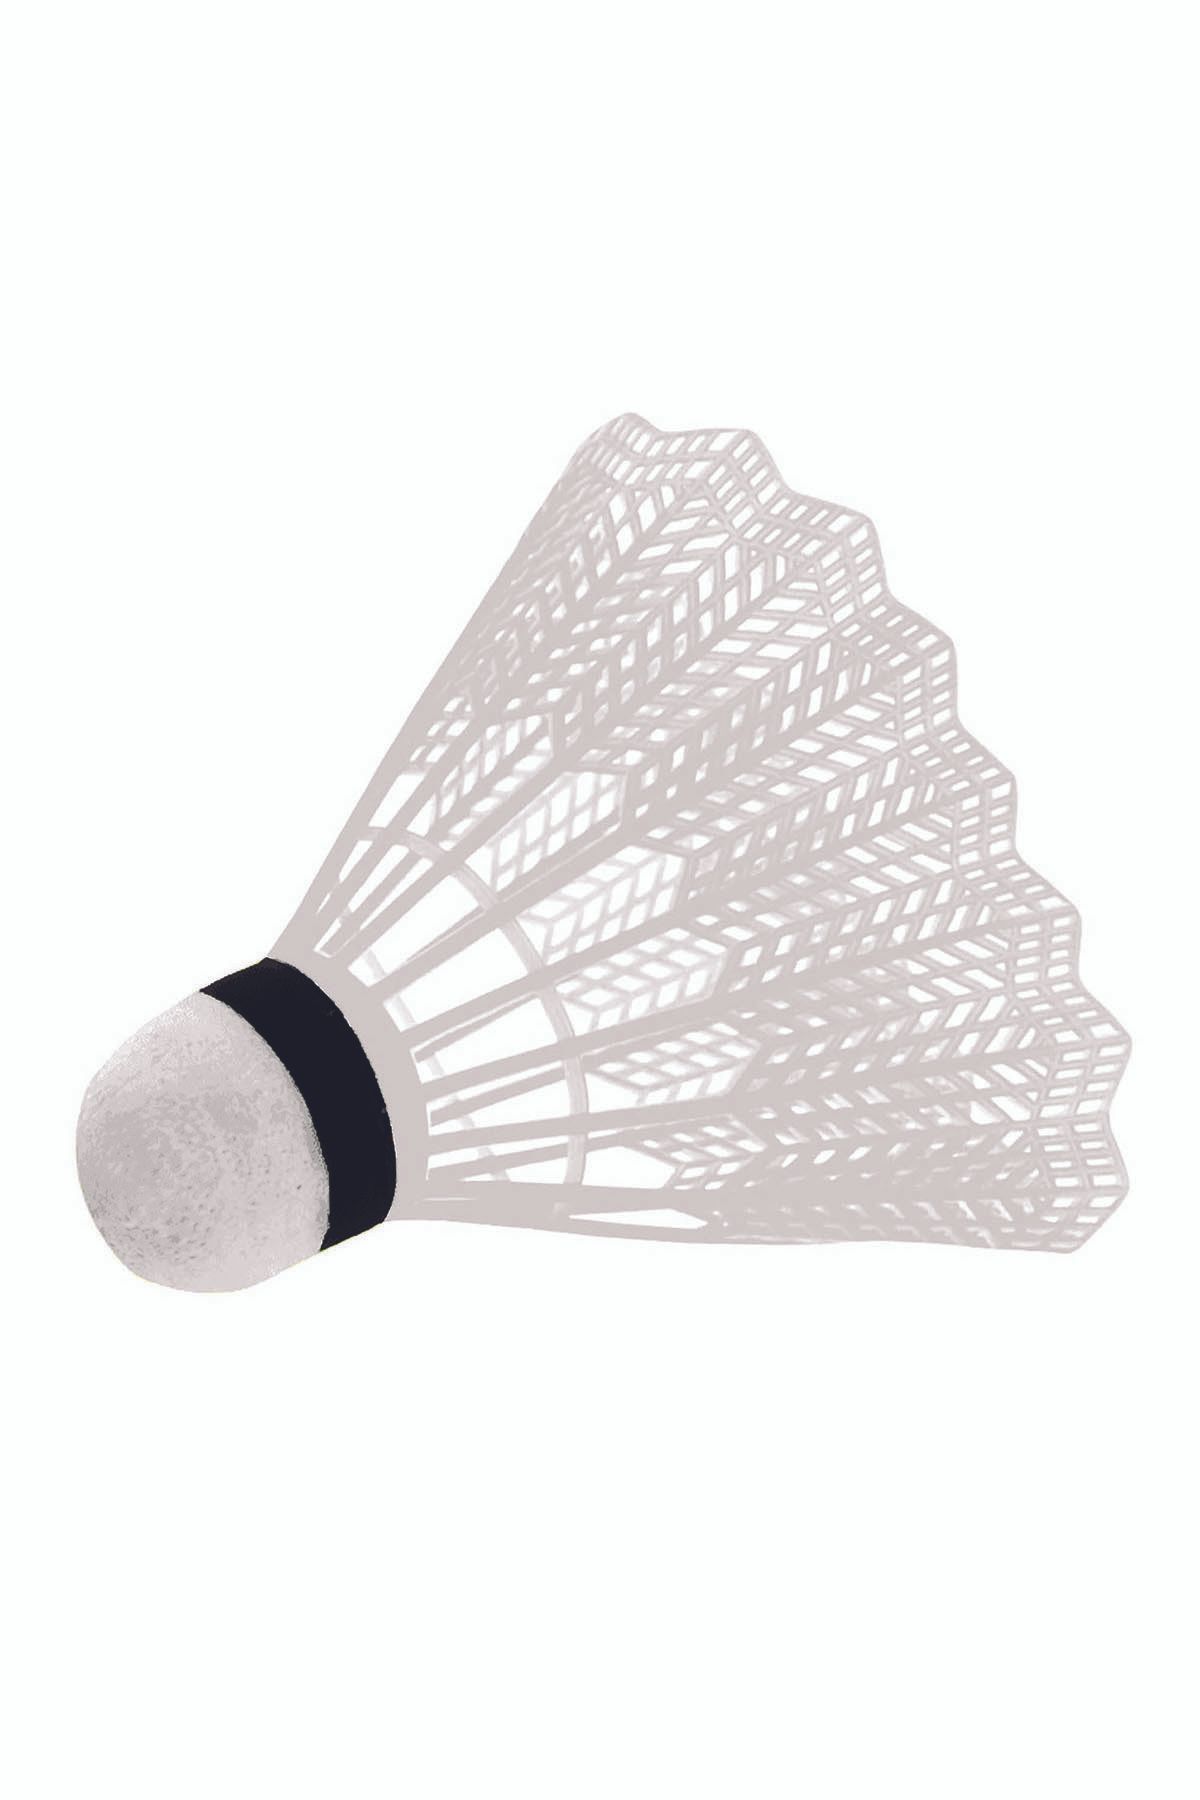 TRYON Badminton Top Badminton Topu Mantar Başlı Plastik 6'Lı Bt-110